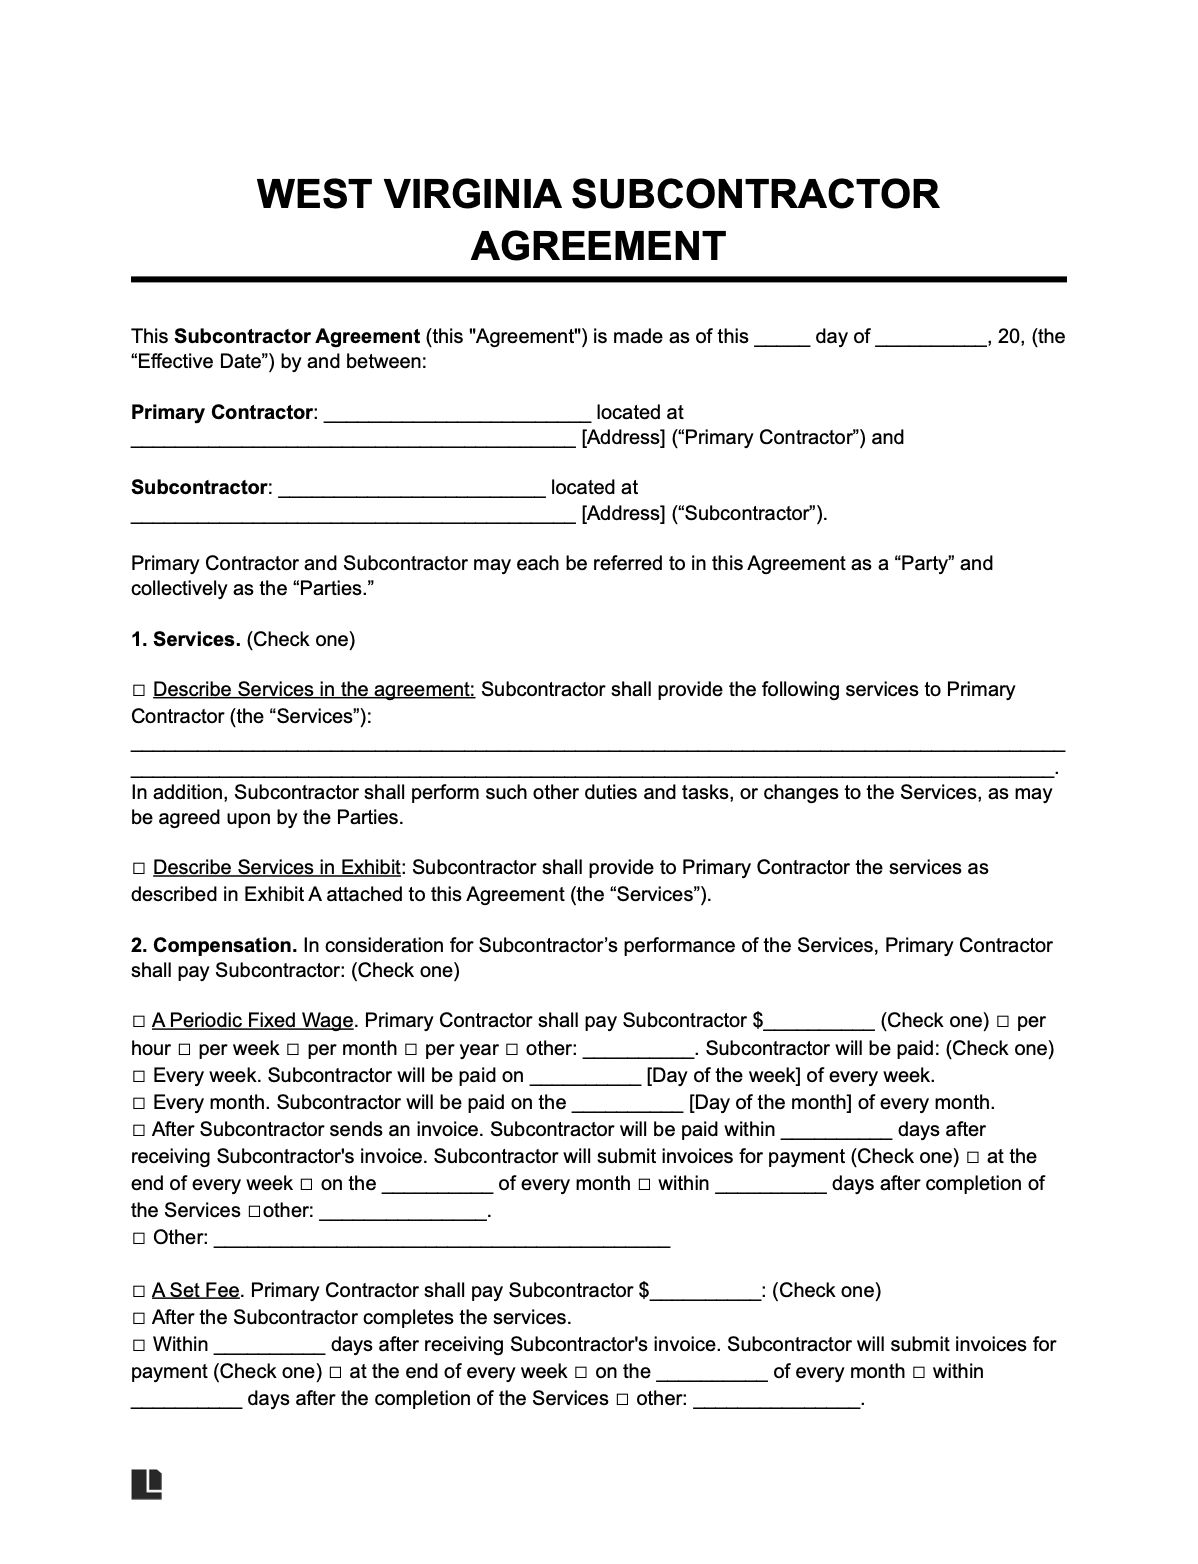 west virginia subcontractor agreement template